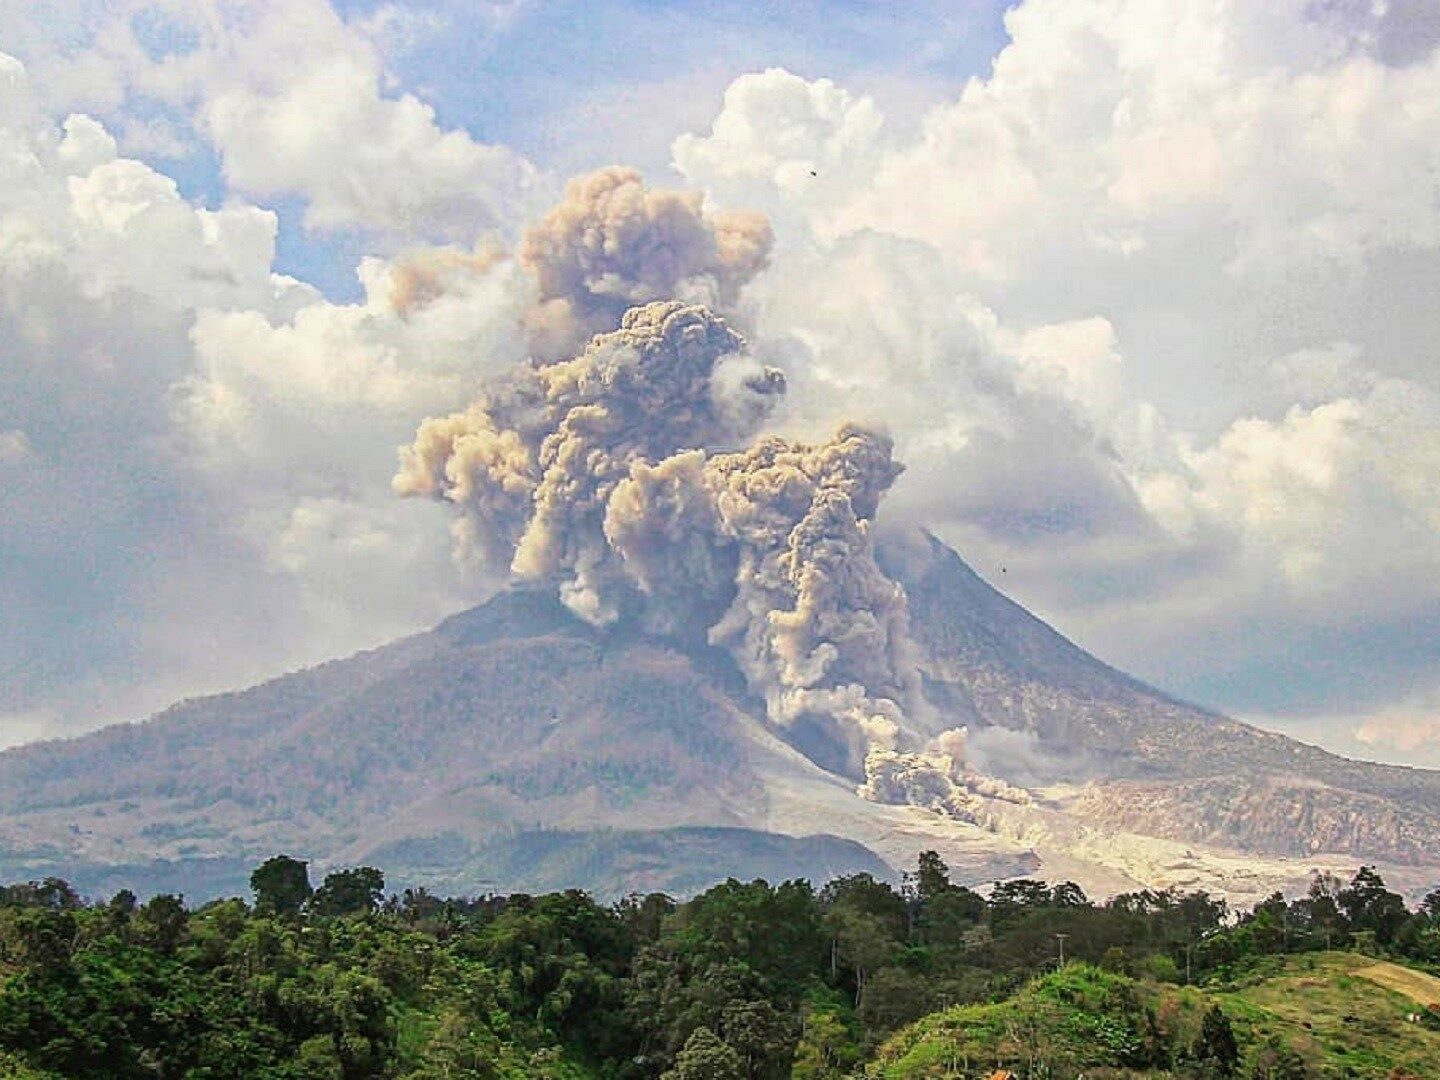 Pesona muntahan abu vulkanik Gunung Sinabung Karo Sumatera Utara - roel.gabe